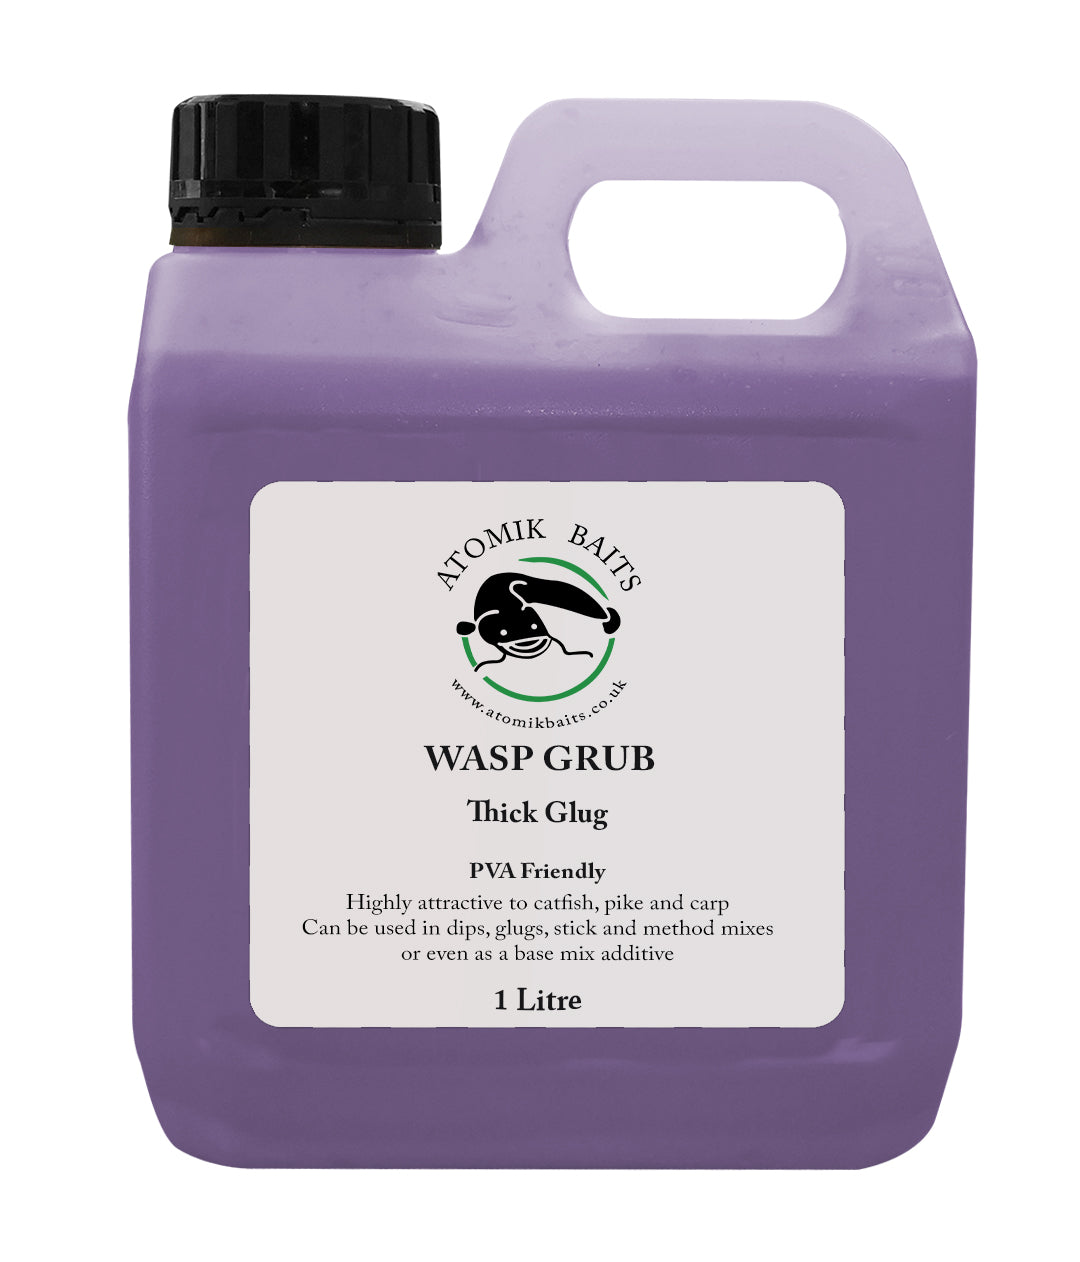 Wasp Grub - Glug, Particle Feed, Liquid Additive, Dip -1 Litre 1000ml